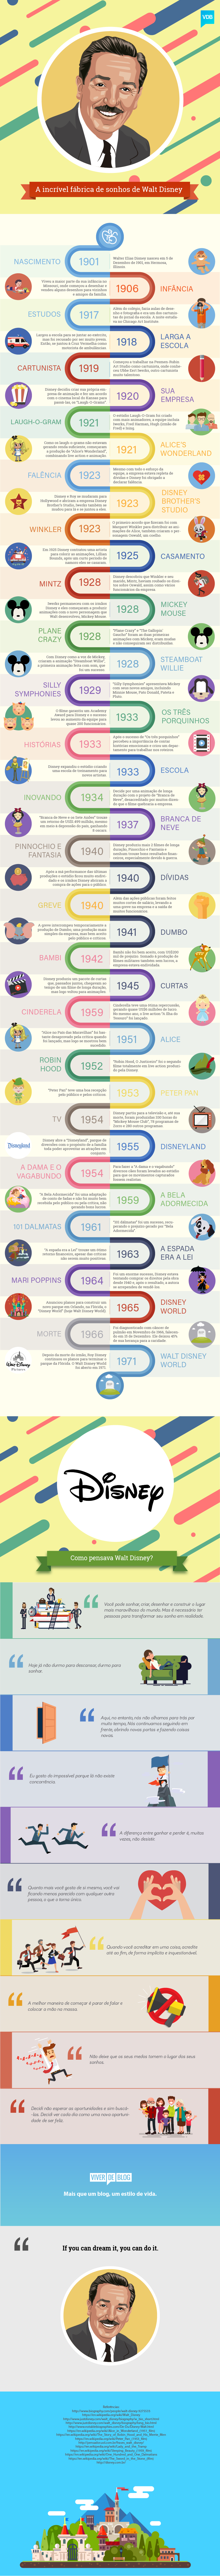 Infográfico Walt Disney